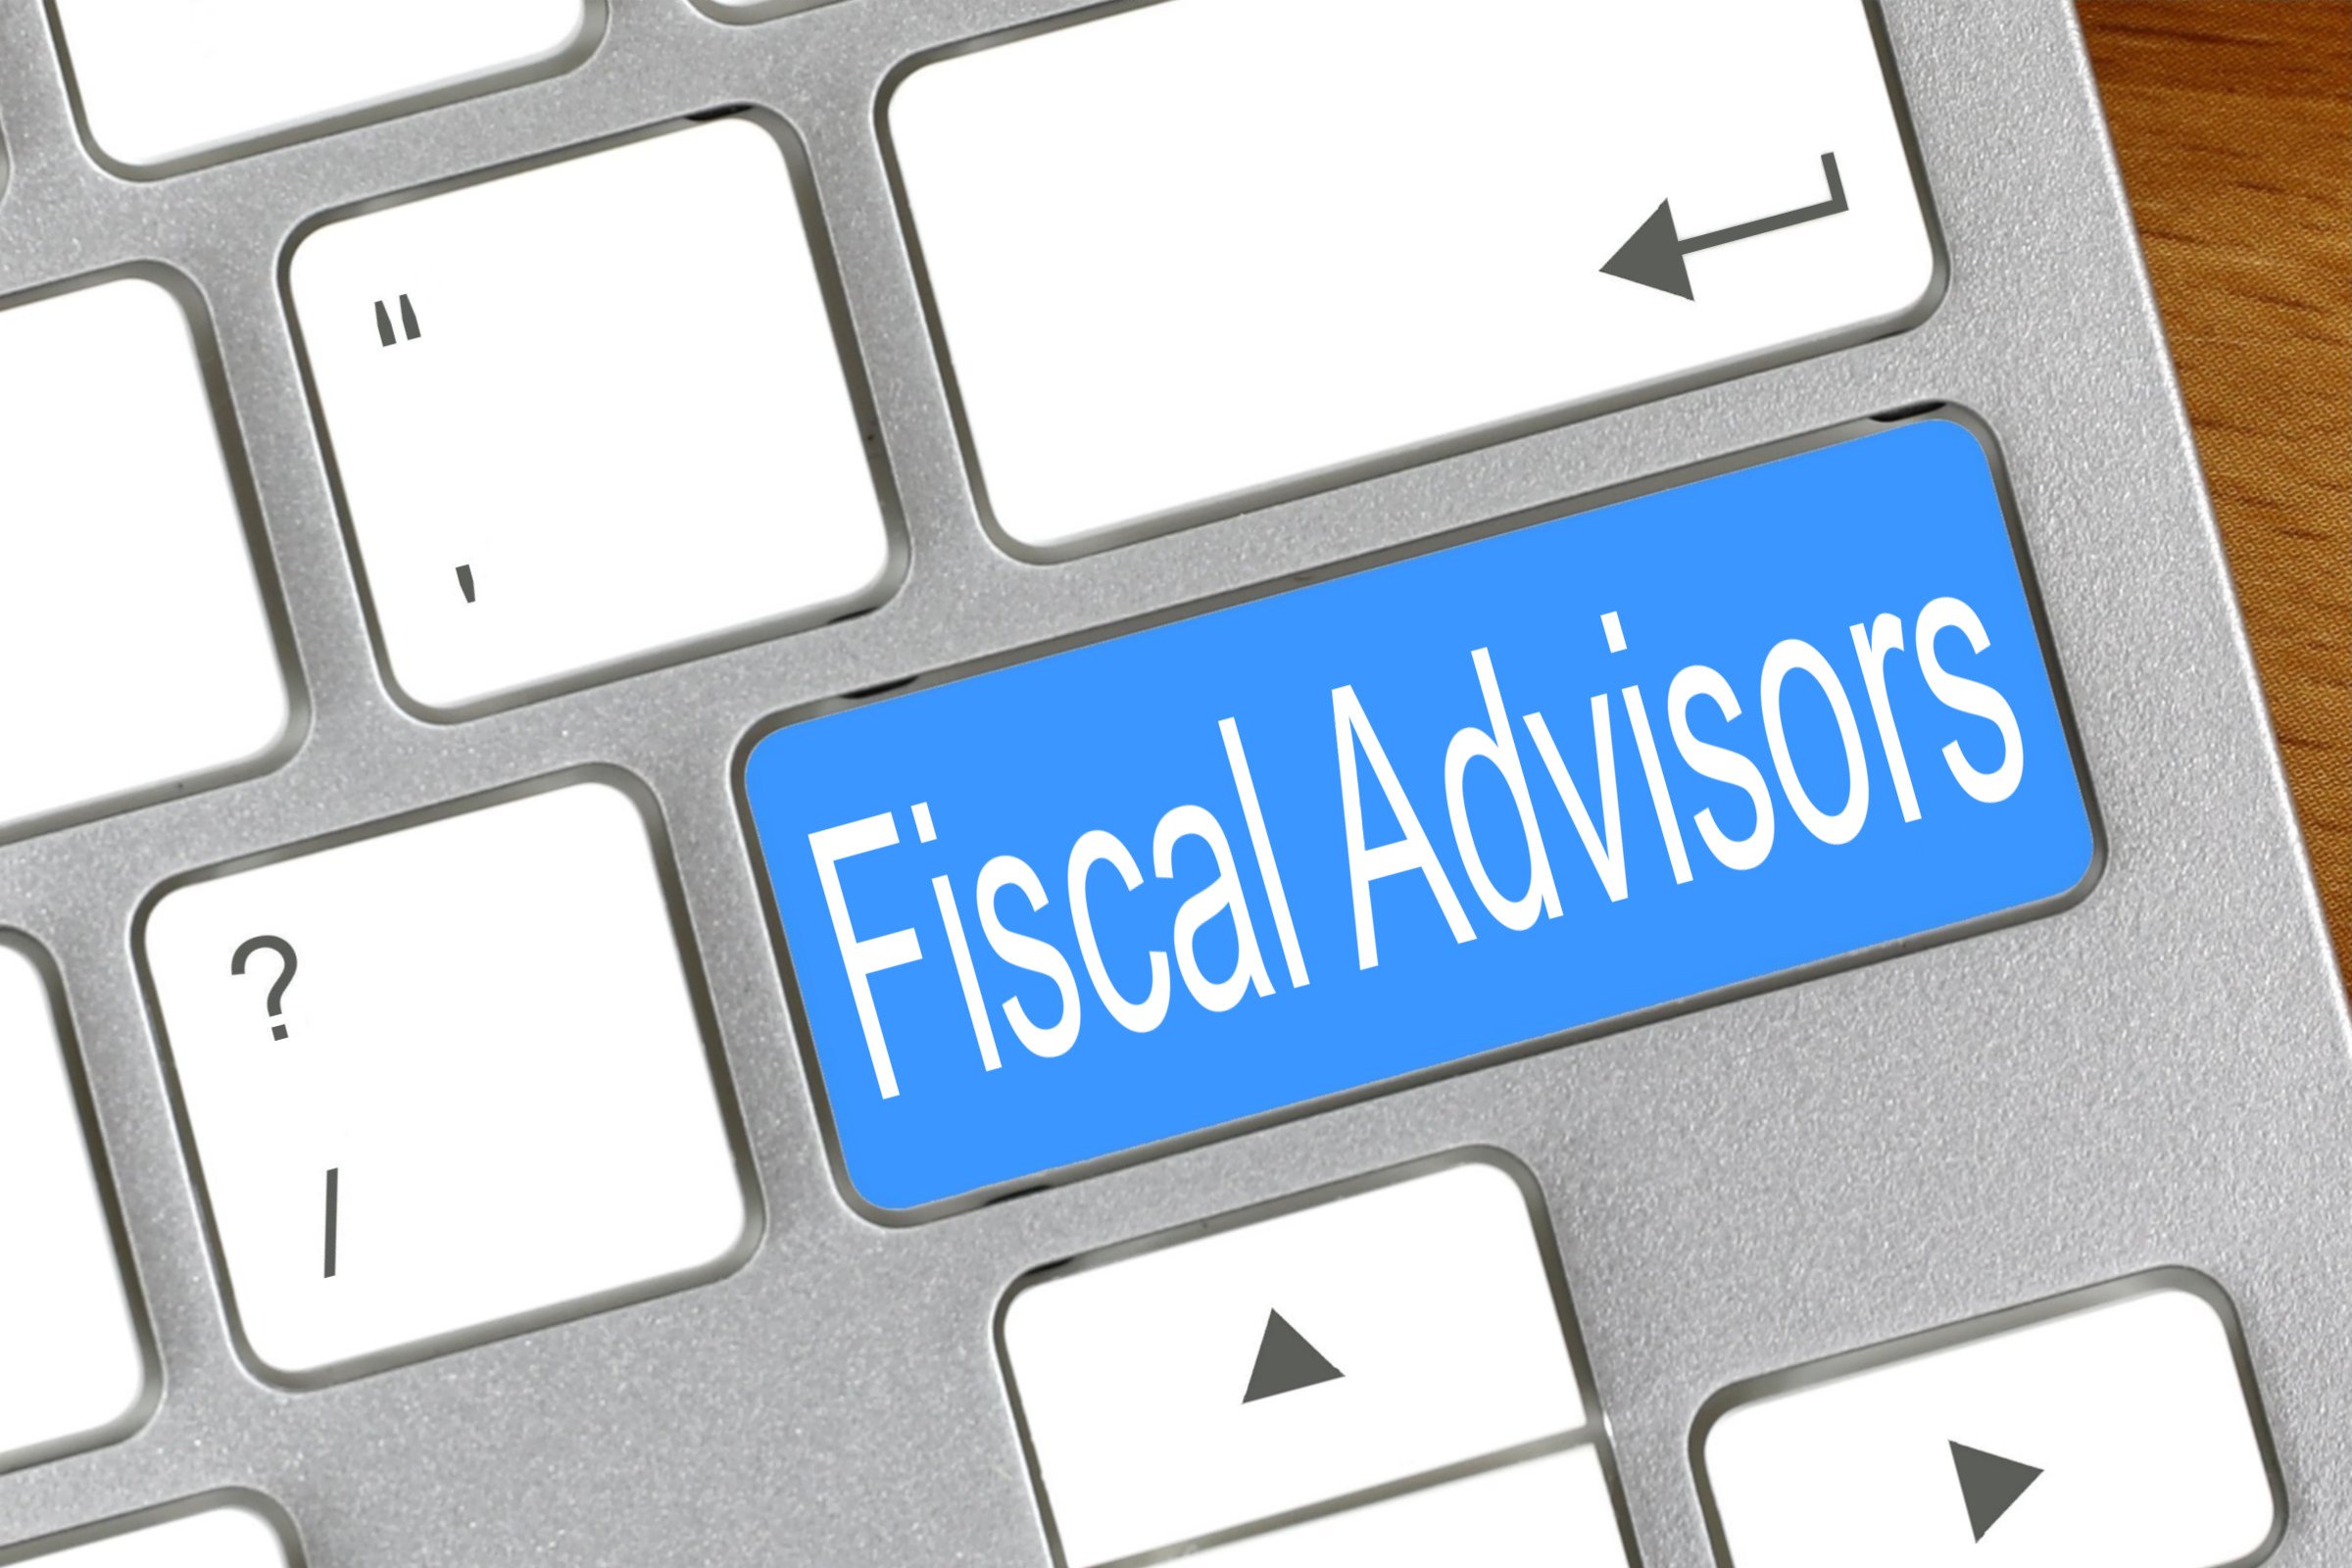 friscal advisors